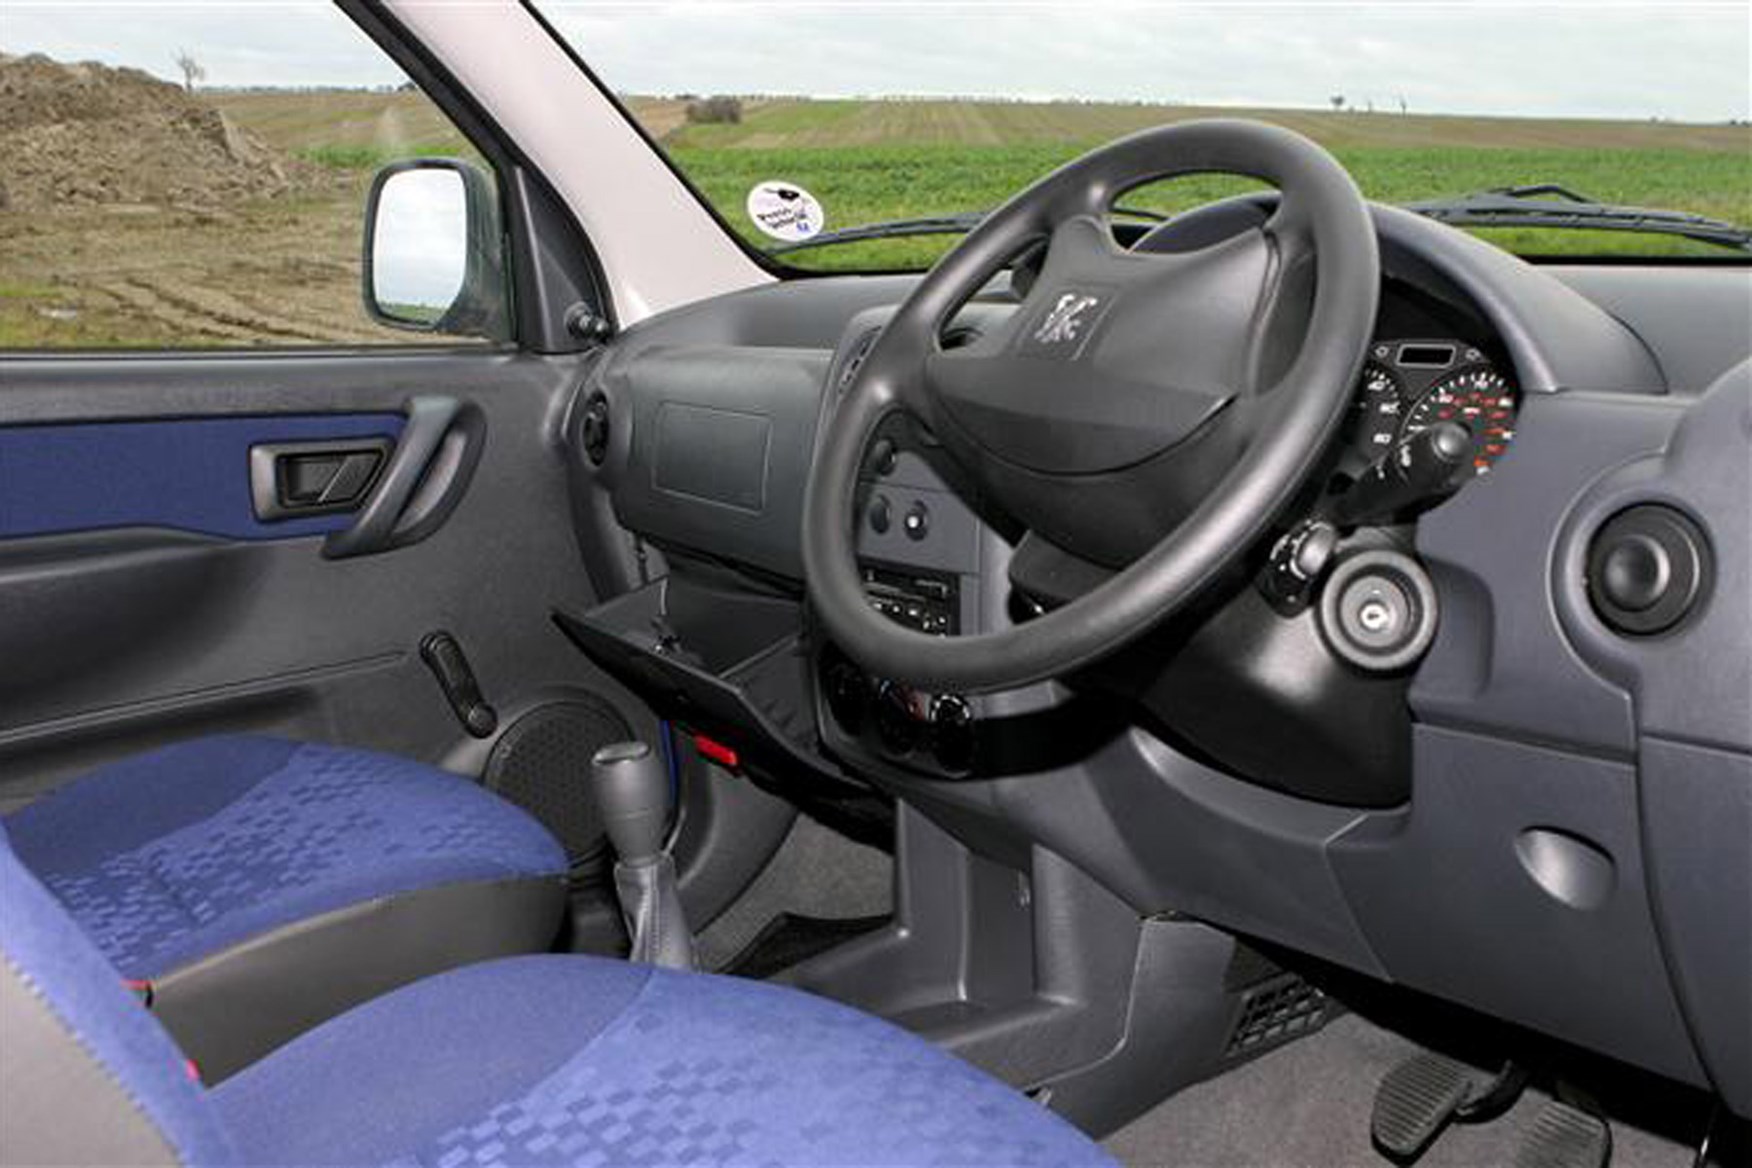 Peugeot Partner review on Parkers Vans - interior